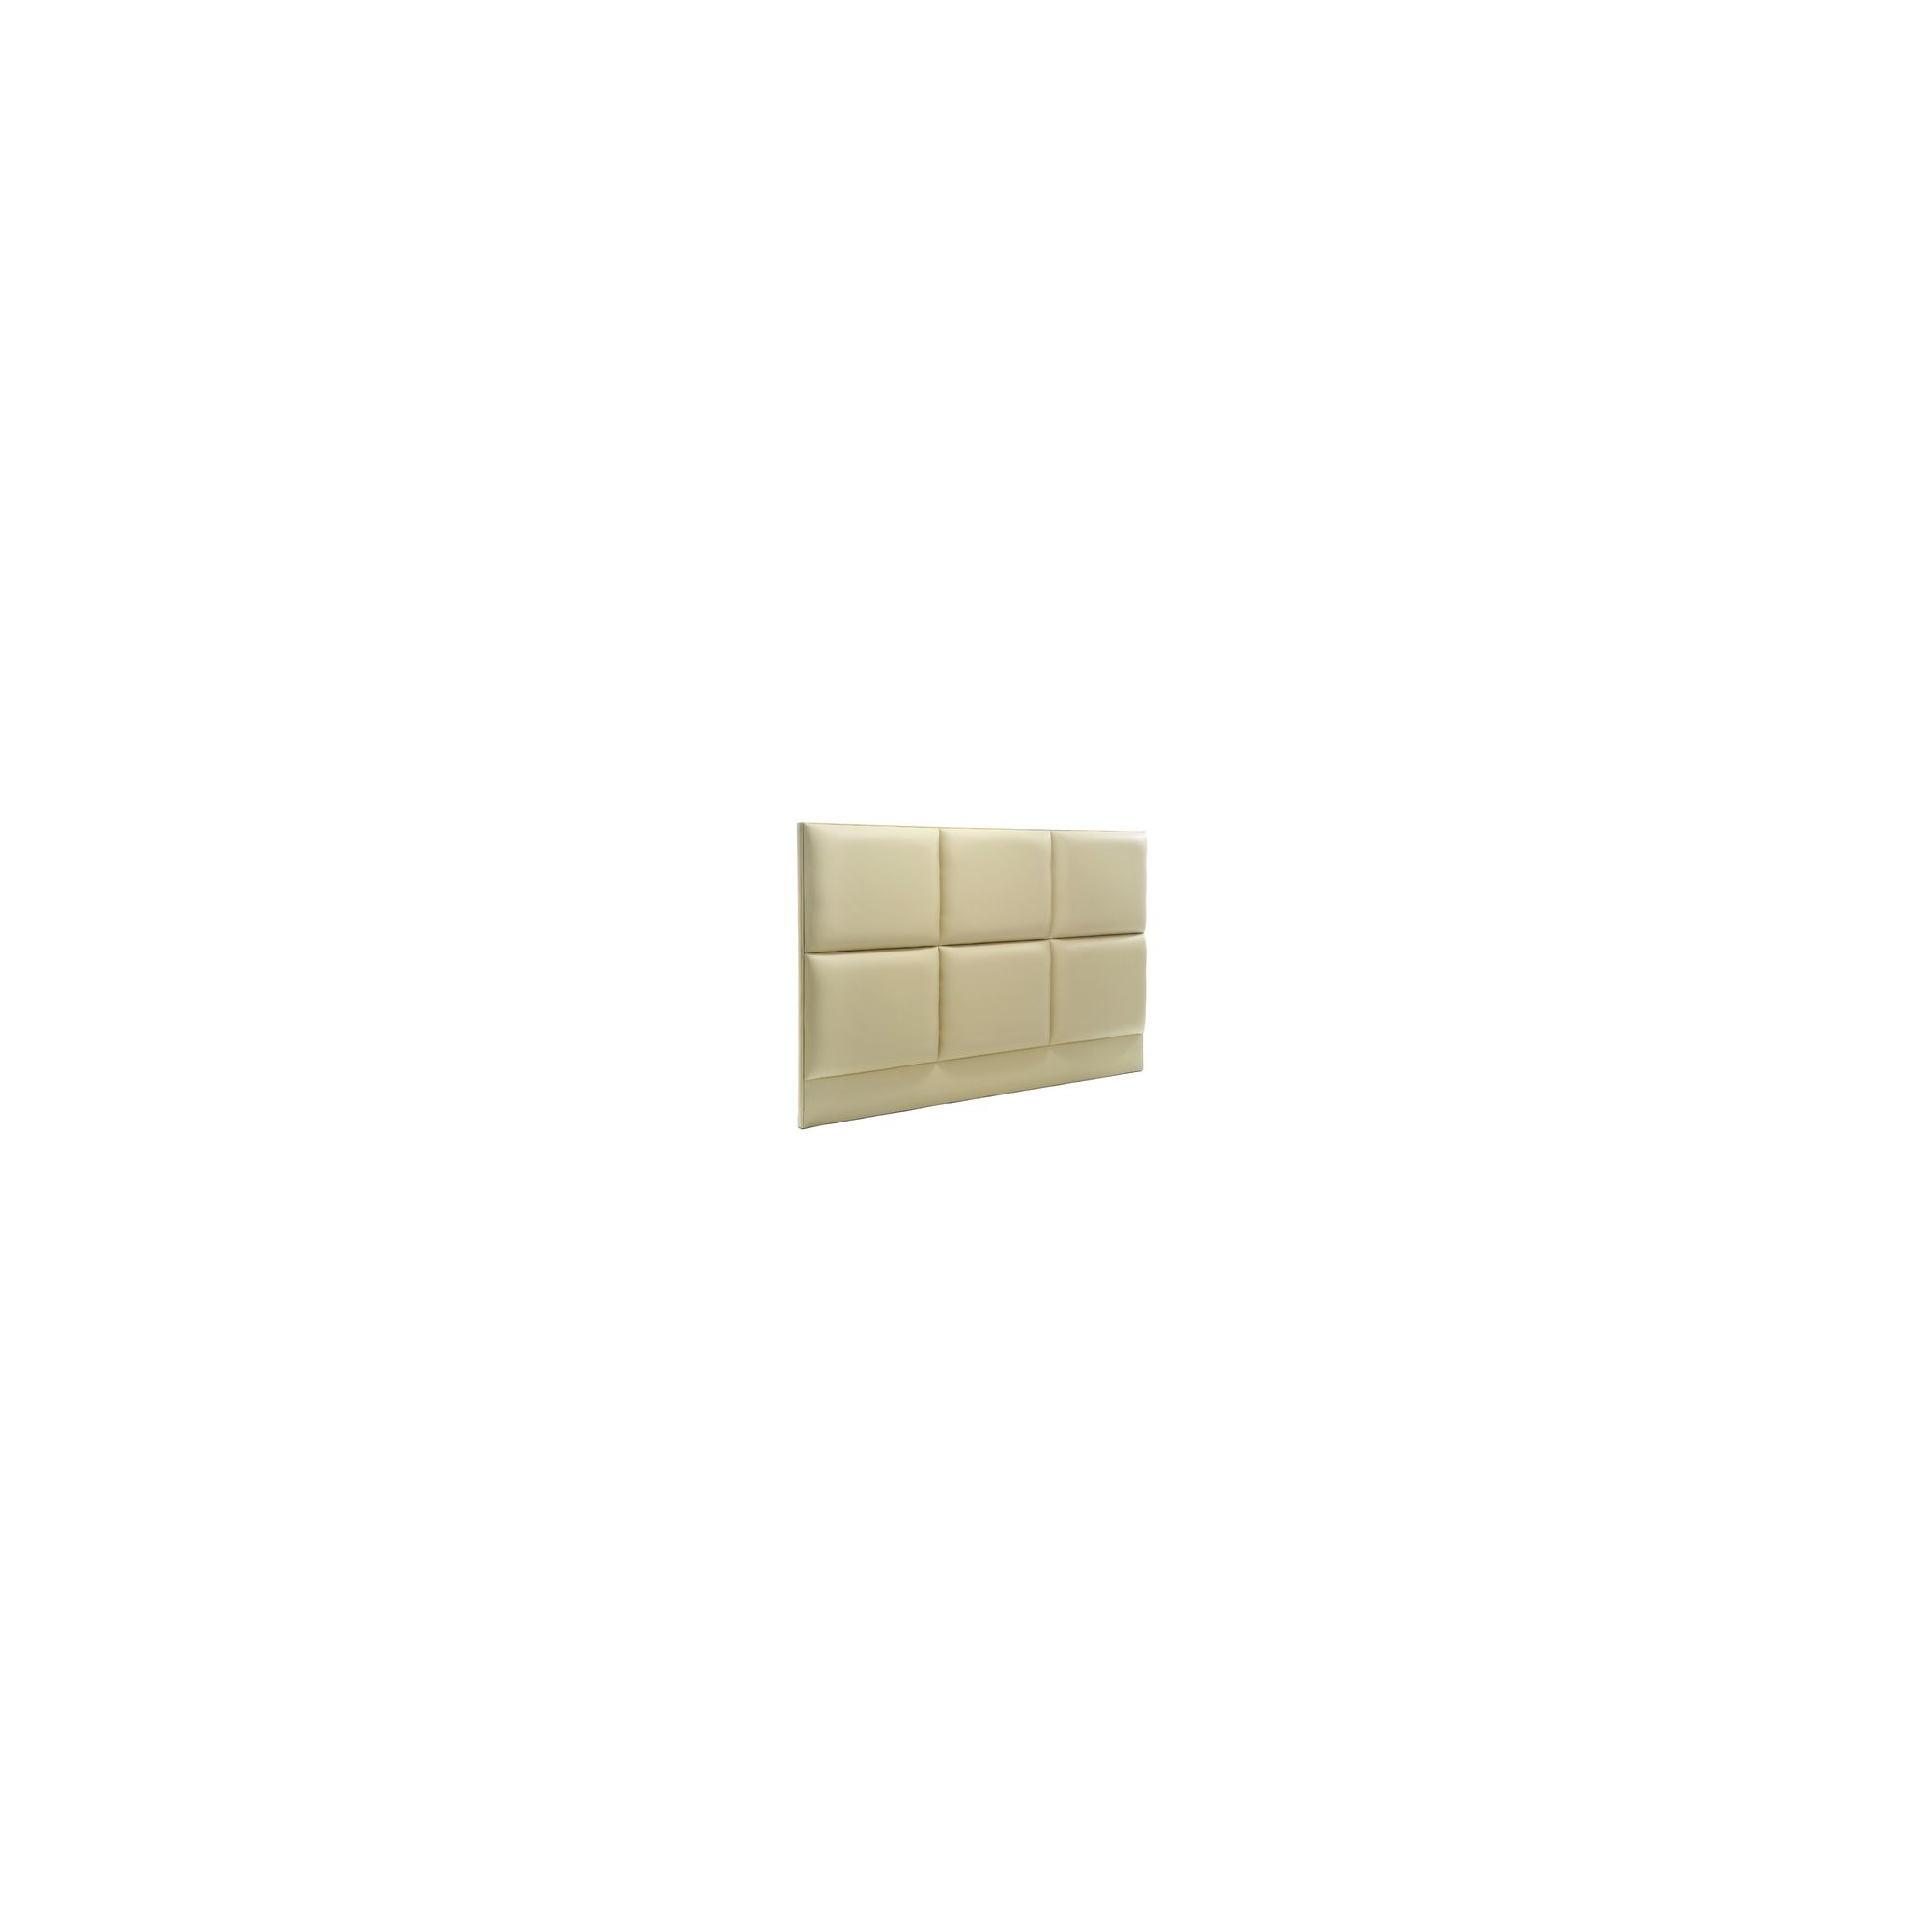 PC Upholstery Columbo Headboard - Kansas Cream - 6' Super King at Tesco Direct